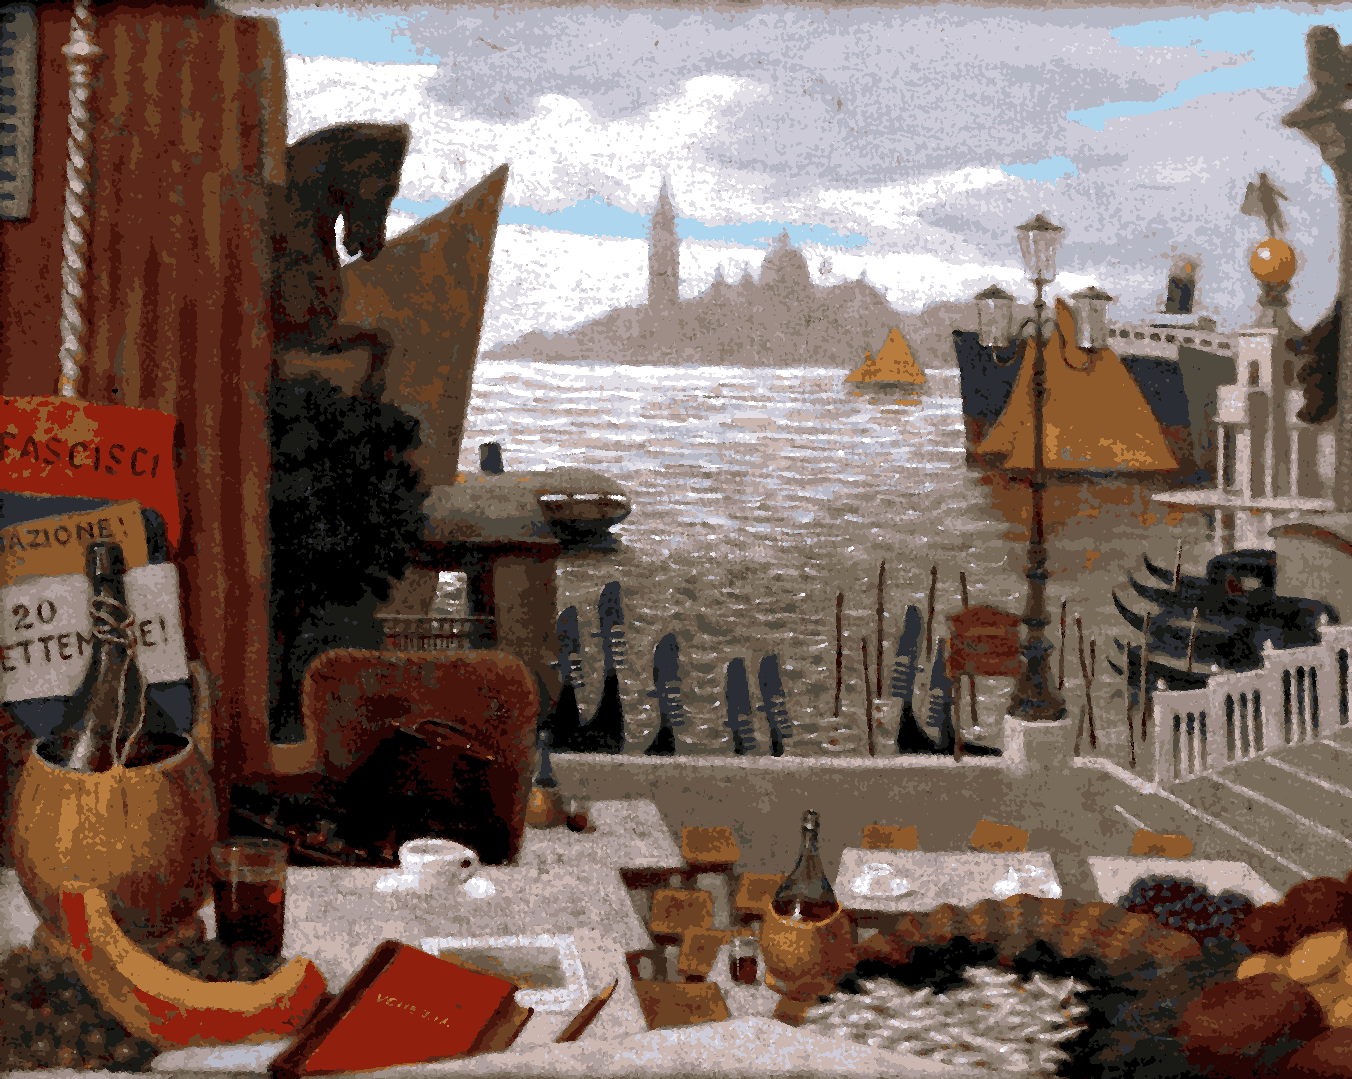 Memories Of Venice by Milan Thomka Mitrovský - Van-Go Paint-By-Number Kit